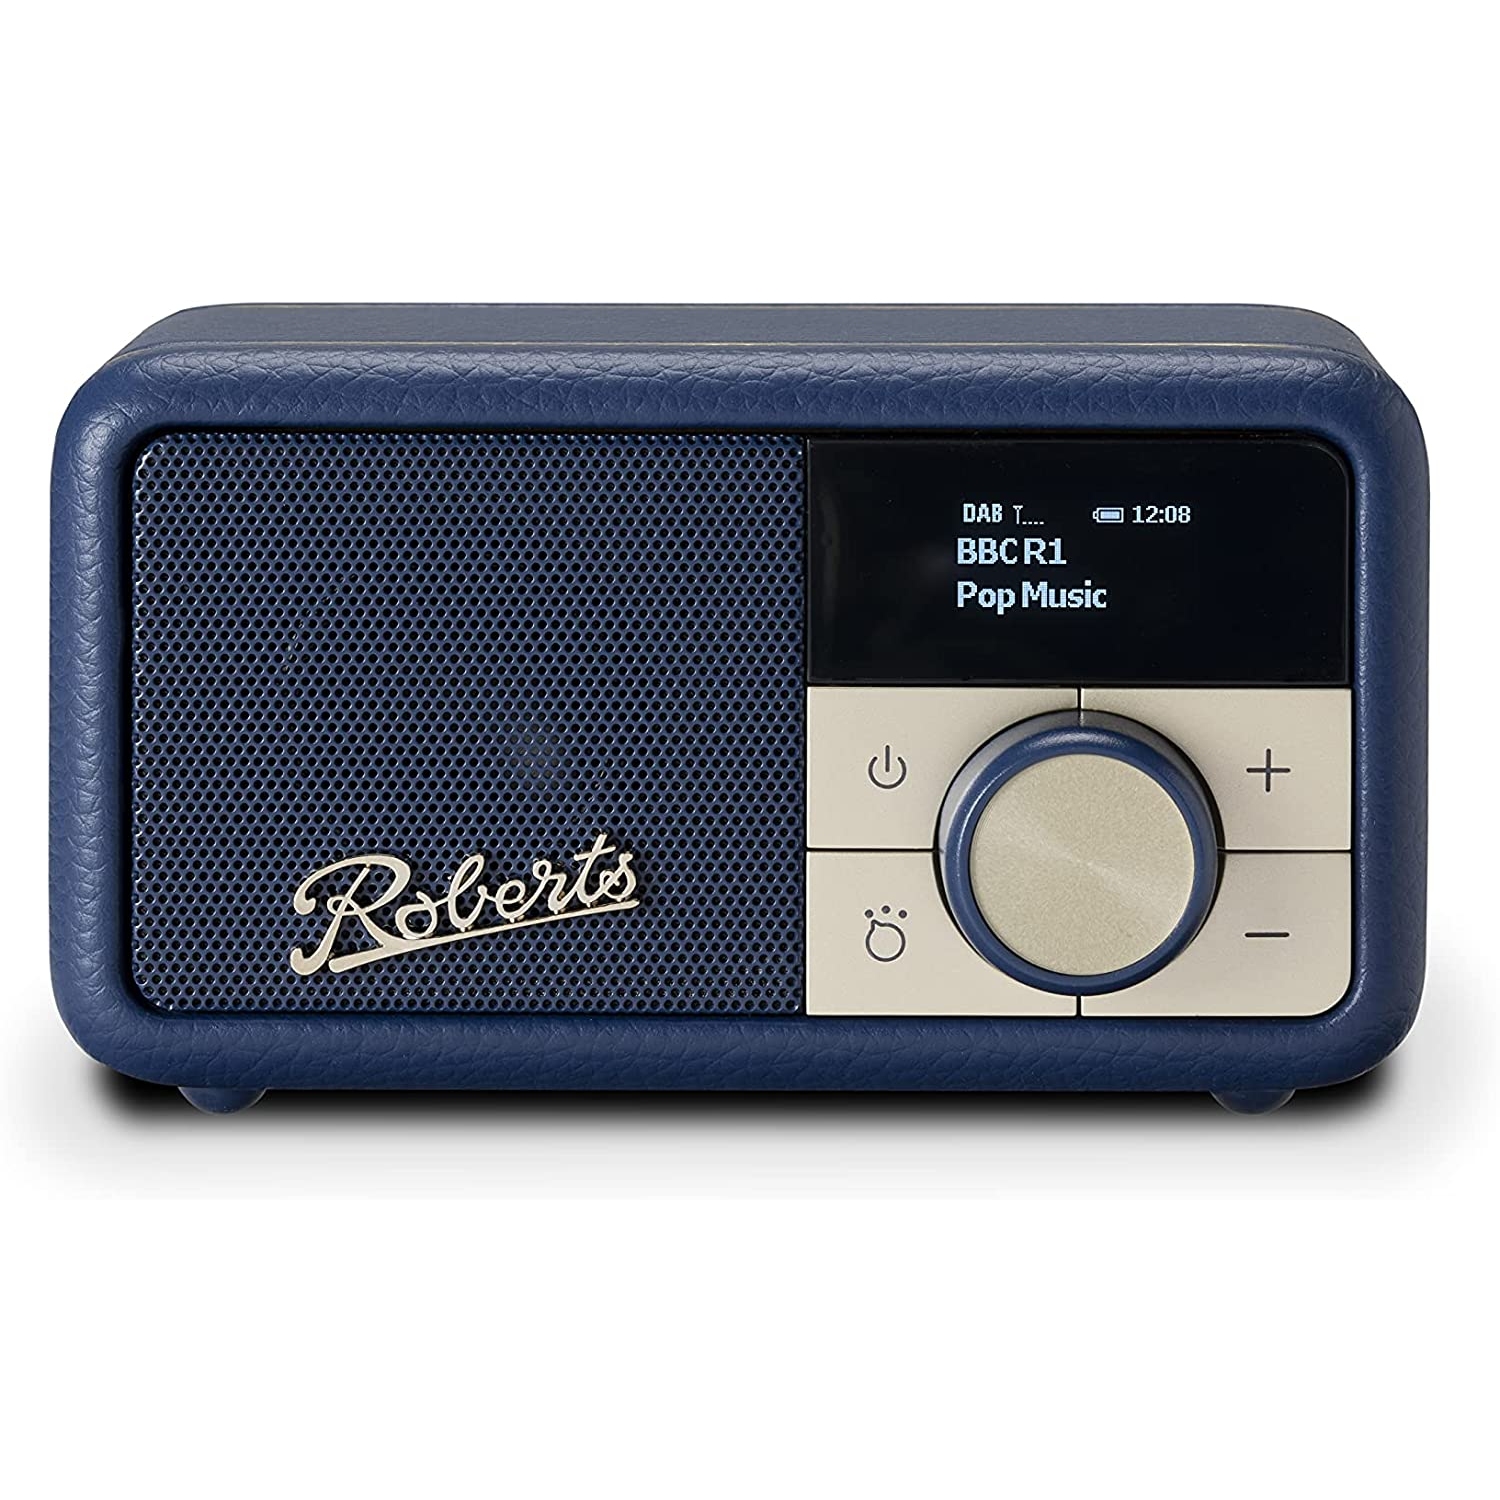 Roberts Radio Revival Petite Portable Radio (midnight blue) - E B 